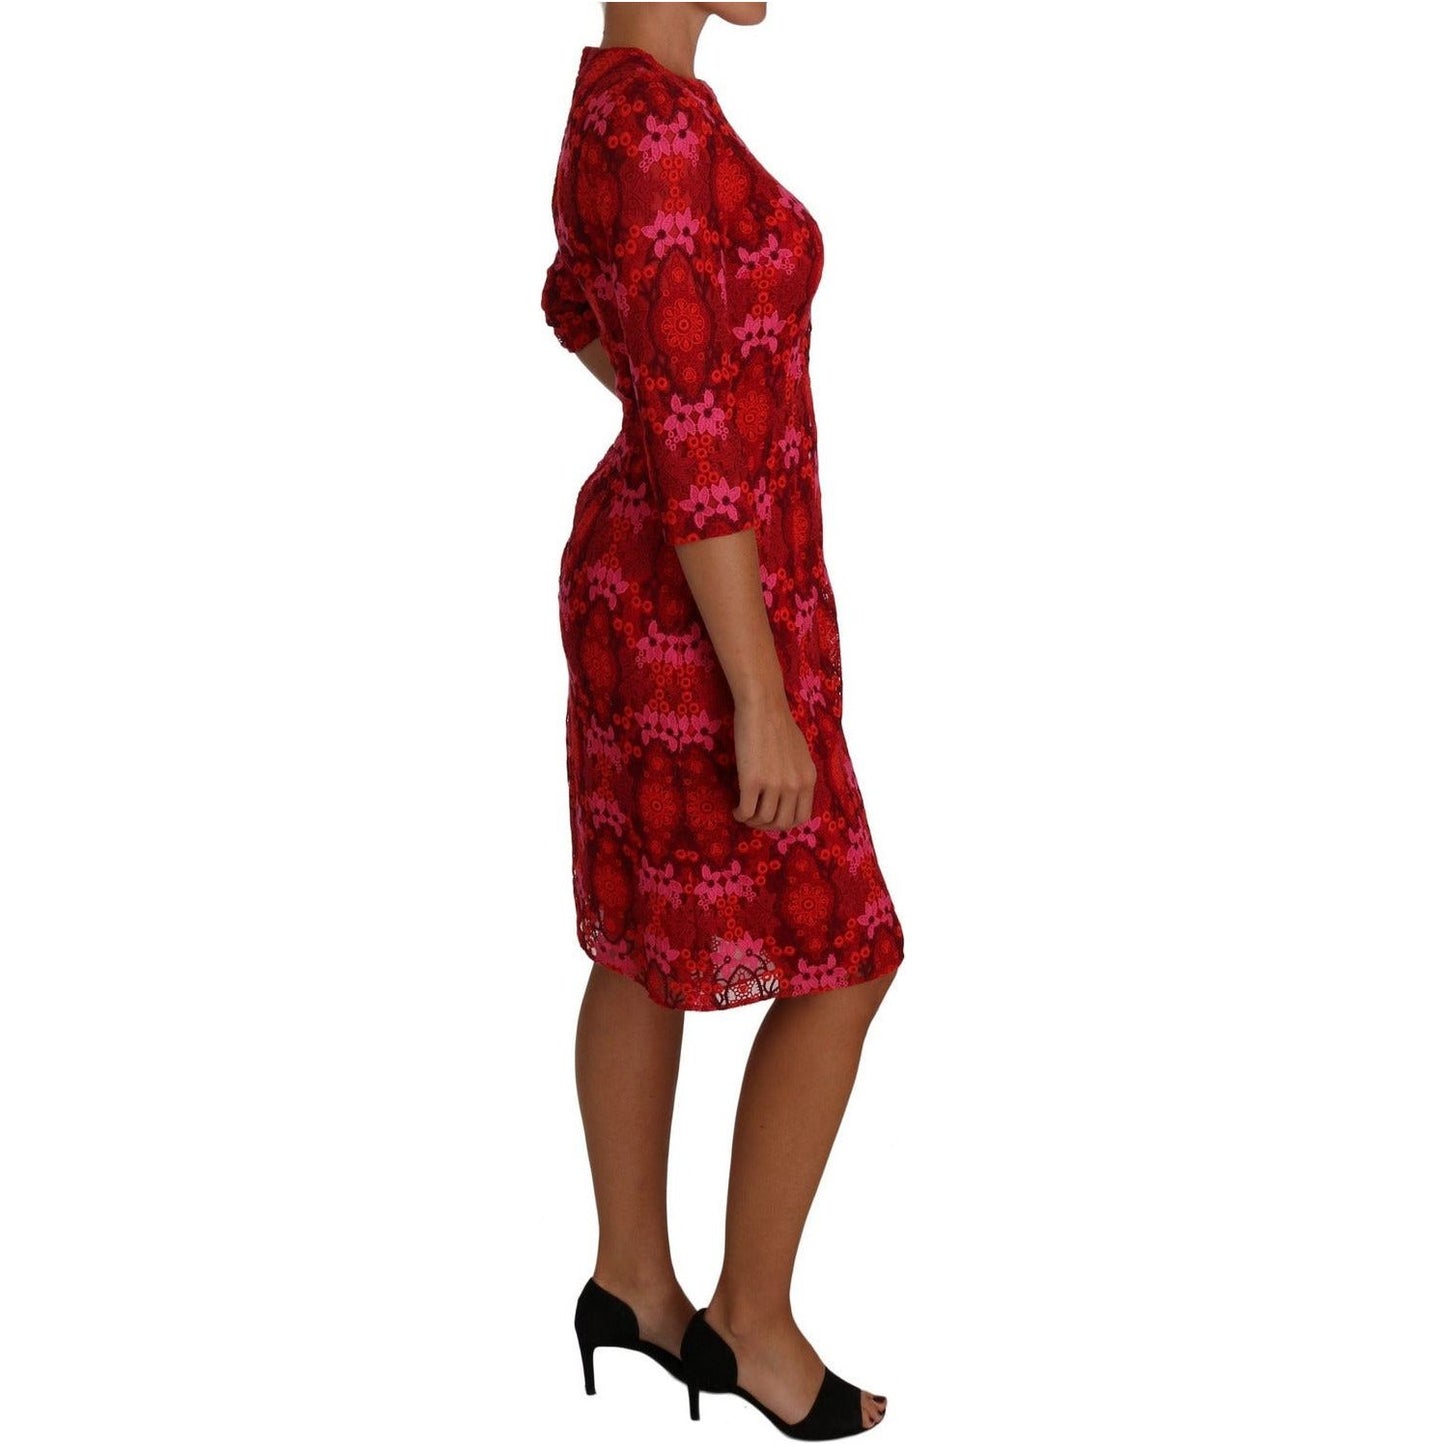 Dolce & Gabbana Elegant Floral Crochet Knee-Length Dress floral-crochet-lace-red-pink-sheath-dress 635562-floral-crochet-lace-red-pink-sheath-dress-4.jpg